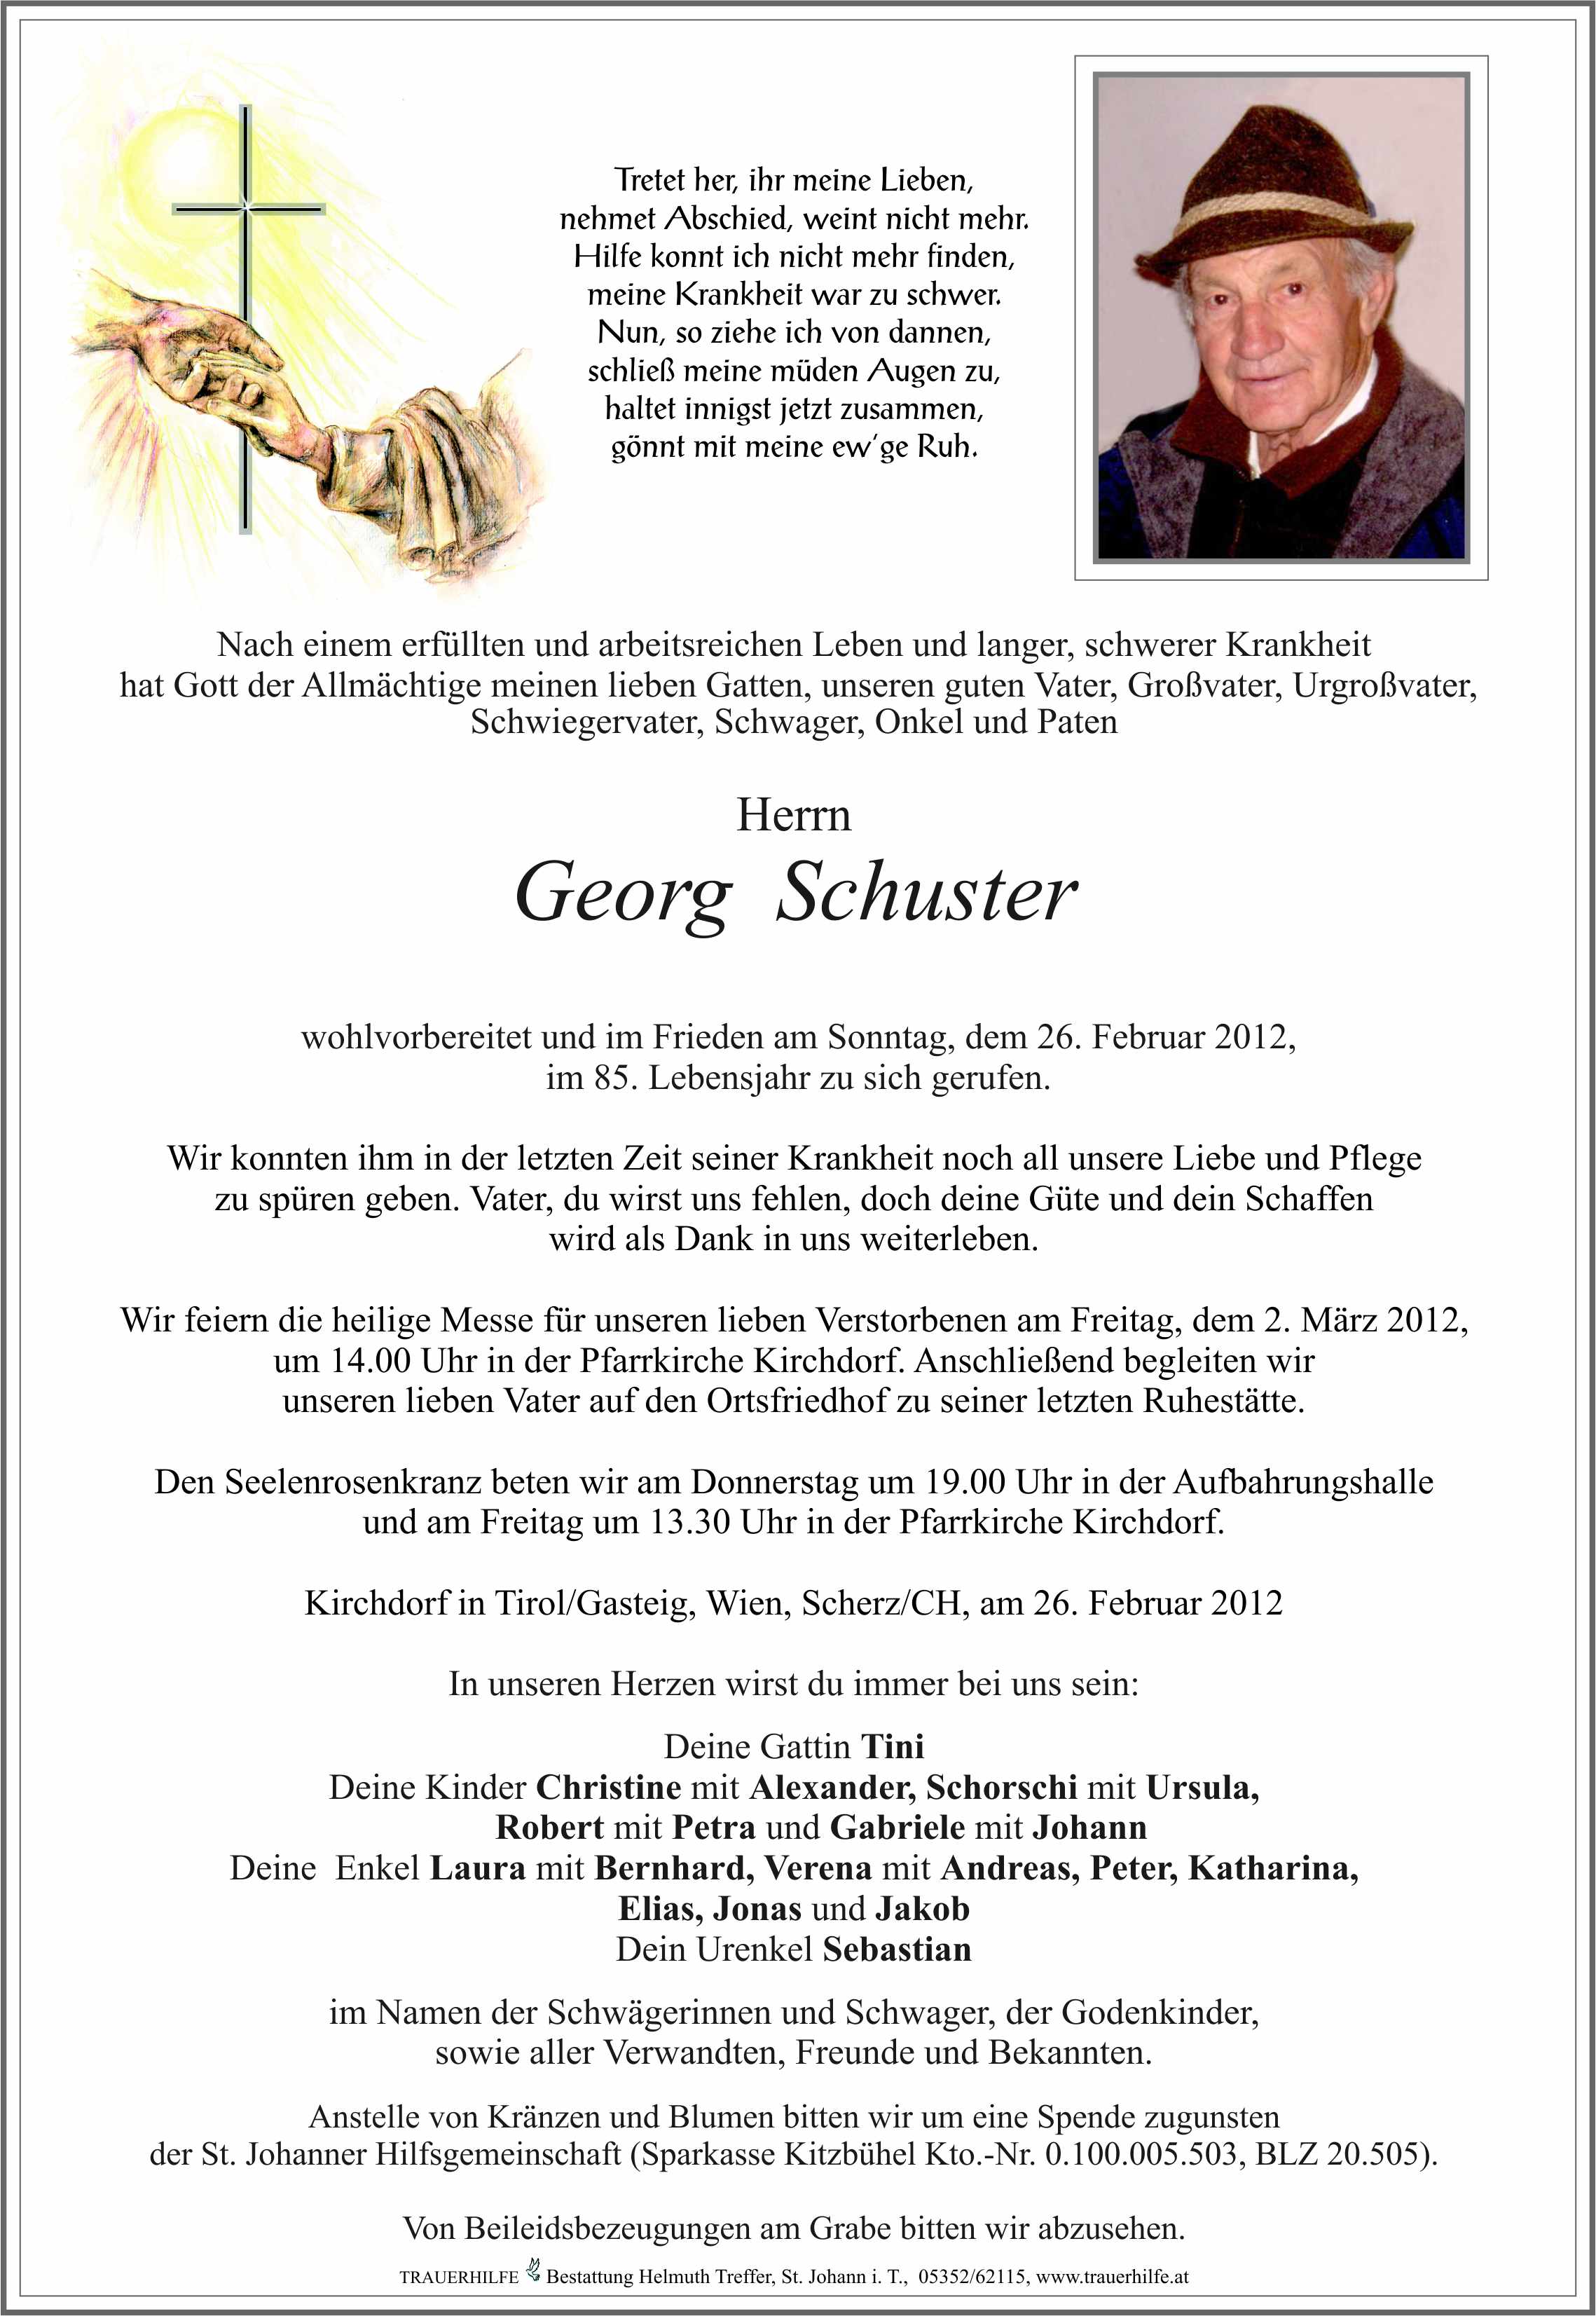 Georg Schuster